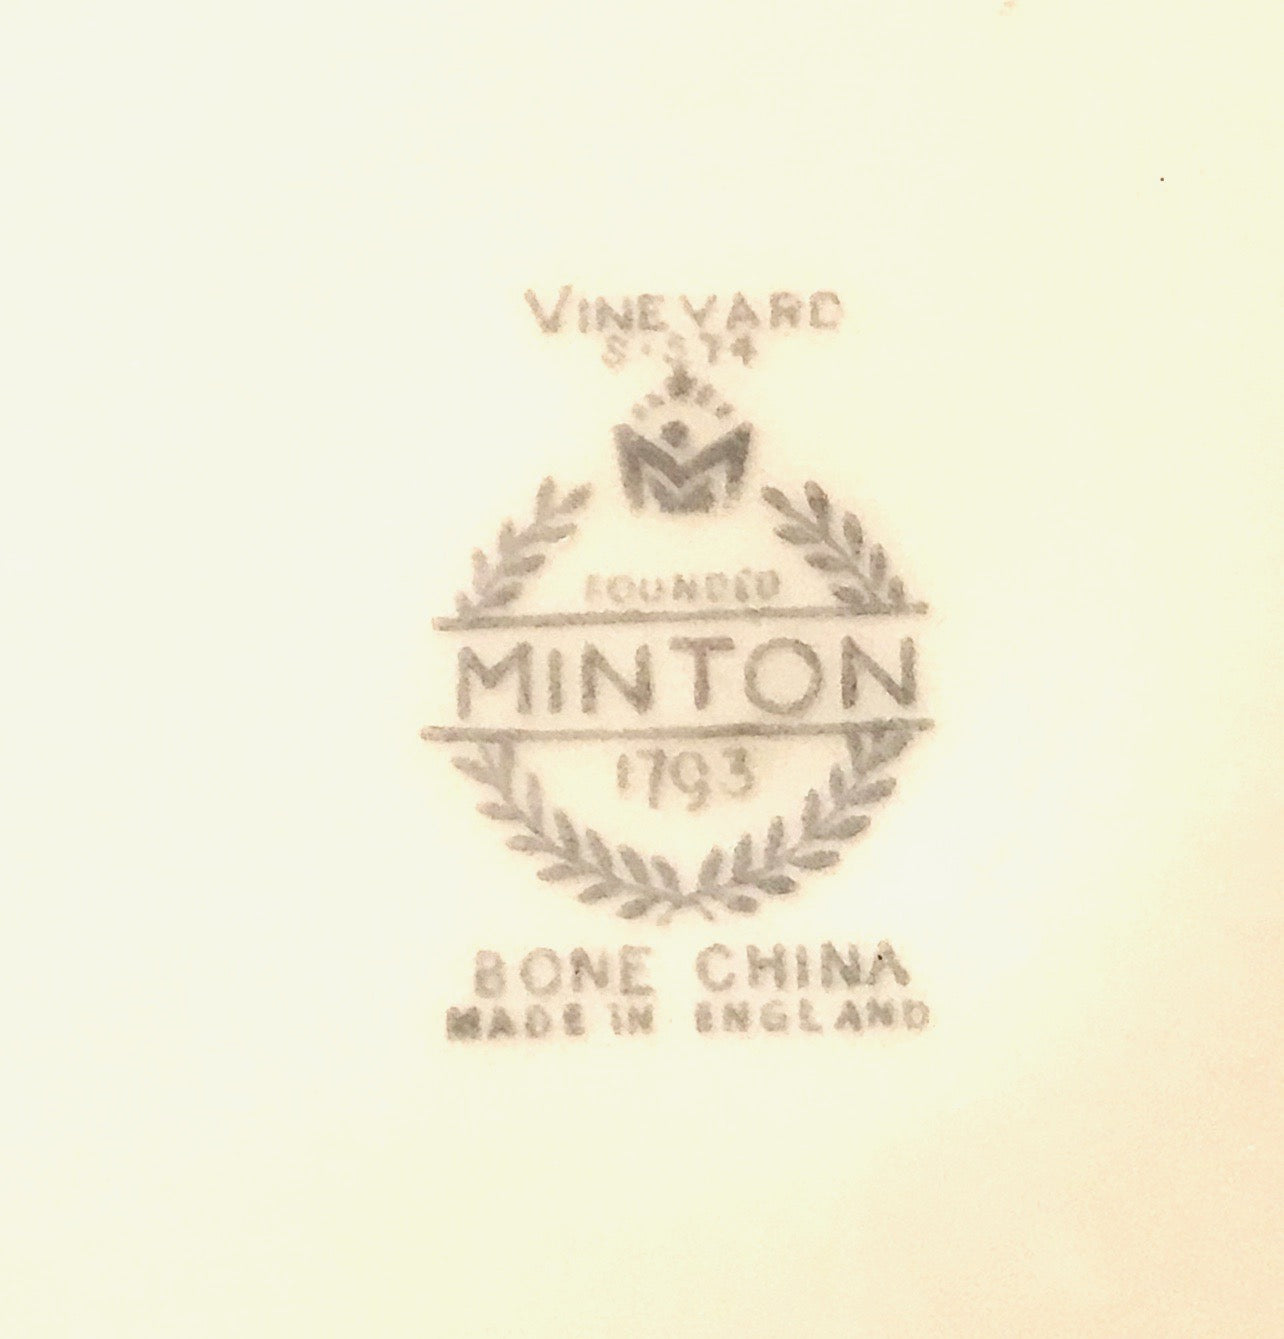 minton bone china factory mark s574 vineyard